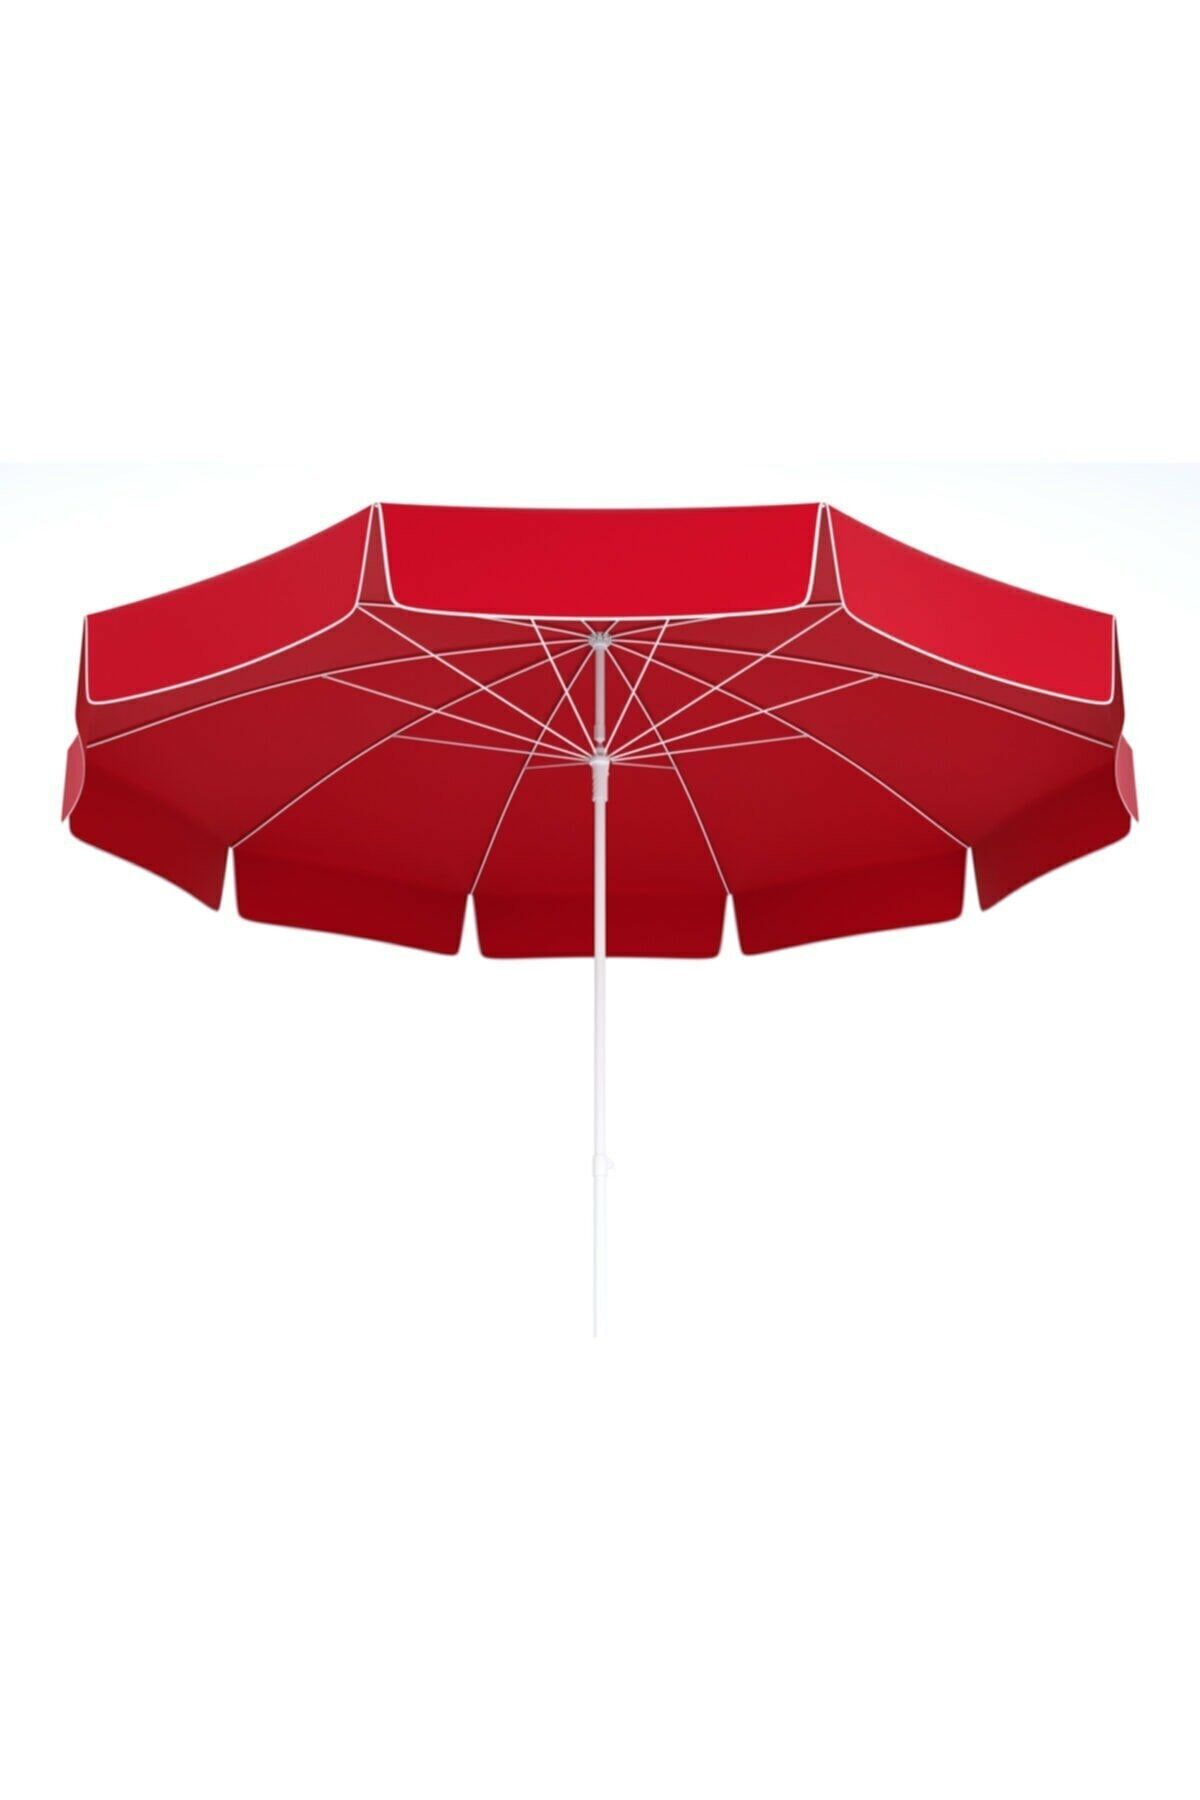 matchbang Kırmızı 2 Metre Polyester Şemsiye (bidonsuz)